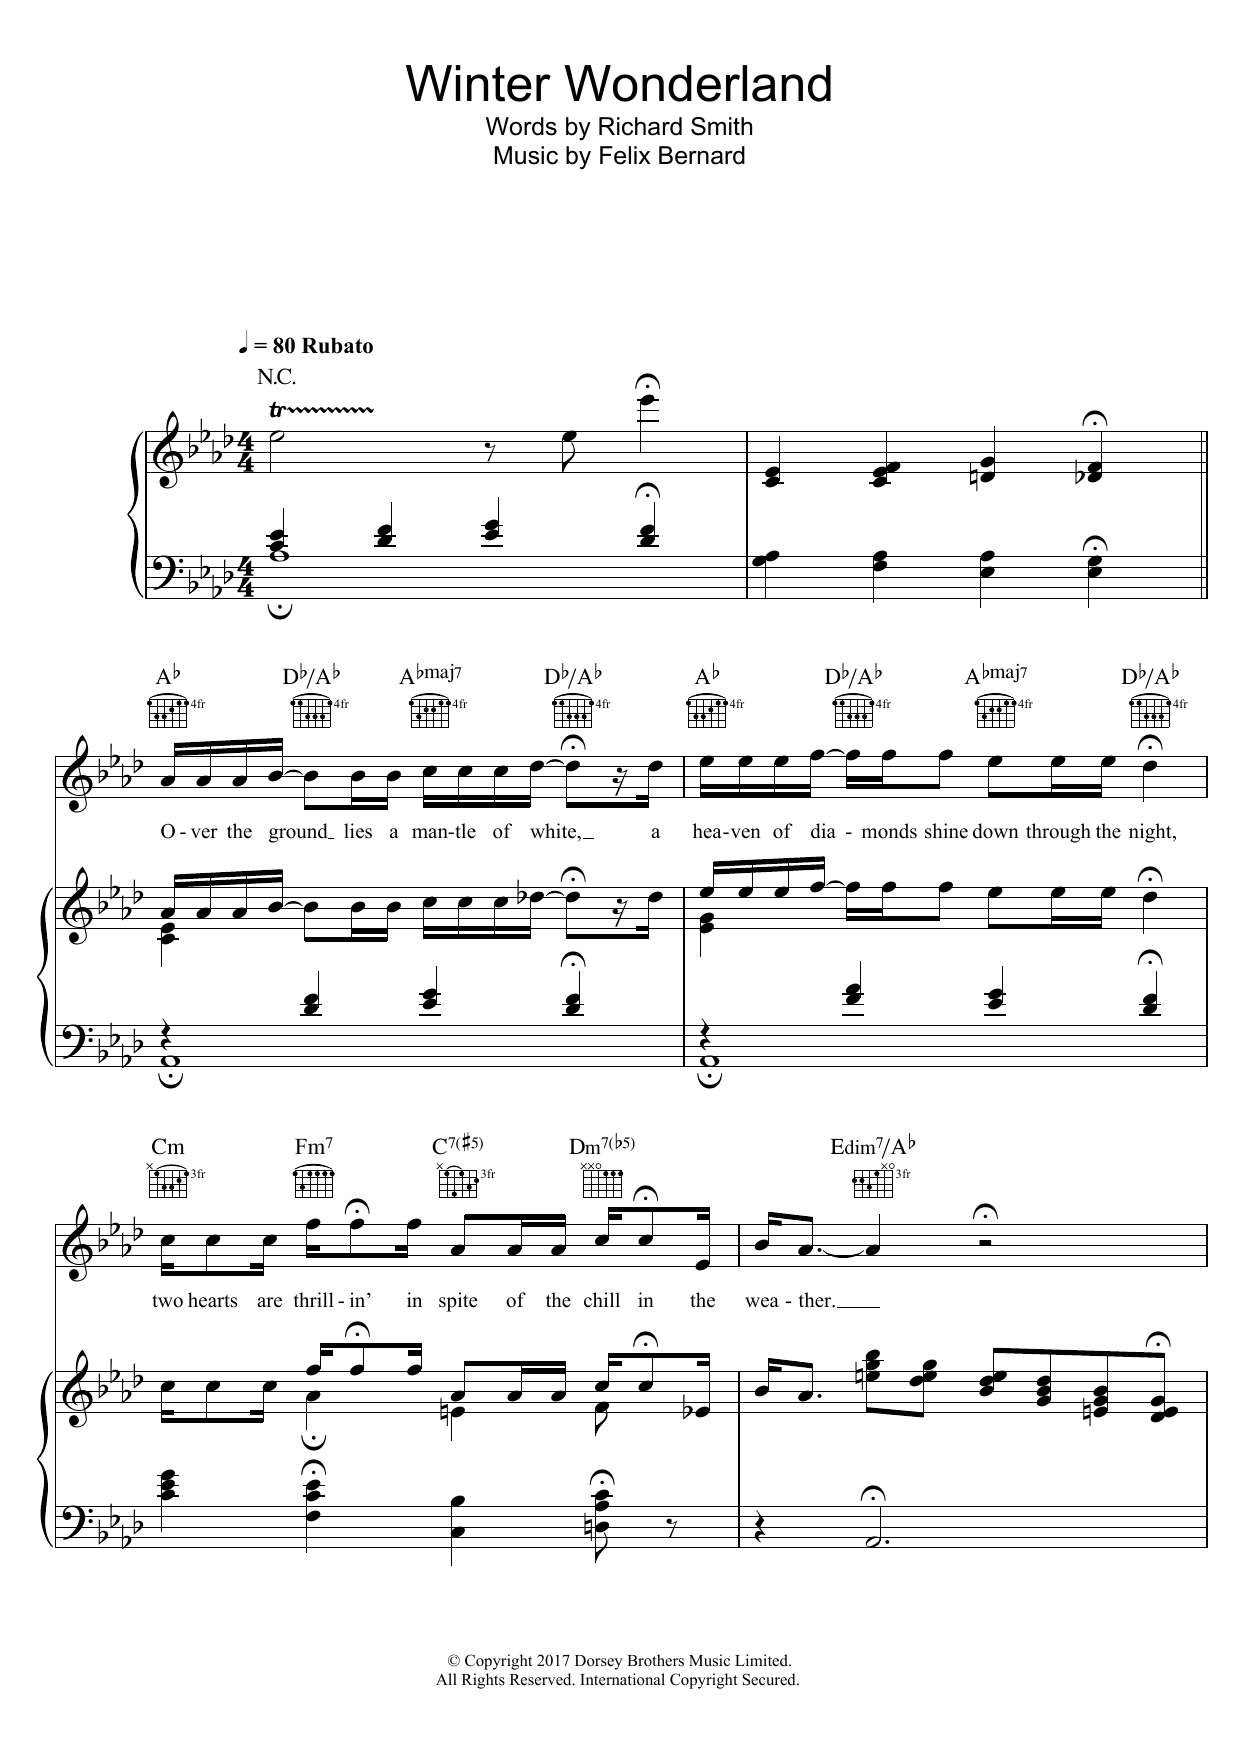 Doris Day Winter Wonderland Sheet Music Notes & Chords for Piano, Vocal & Guitar - Download or Print PDF